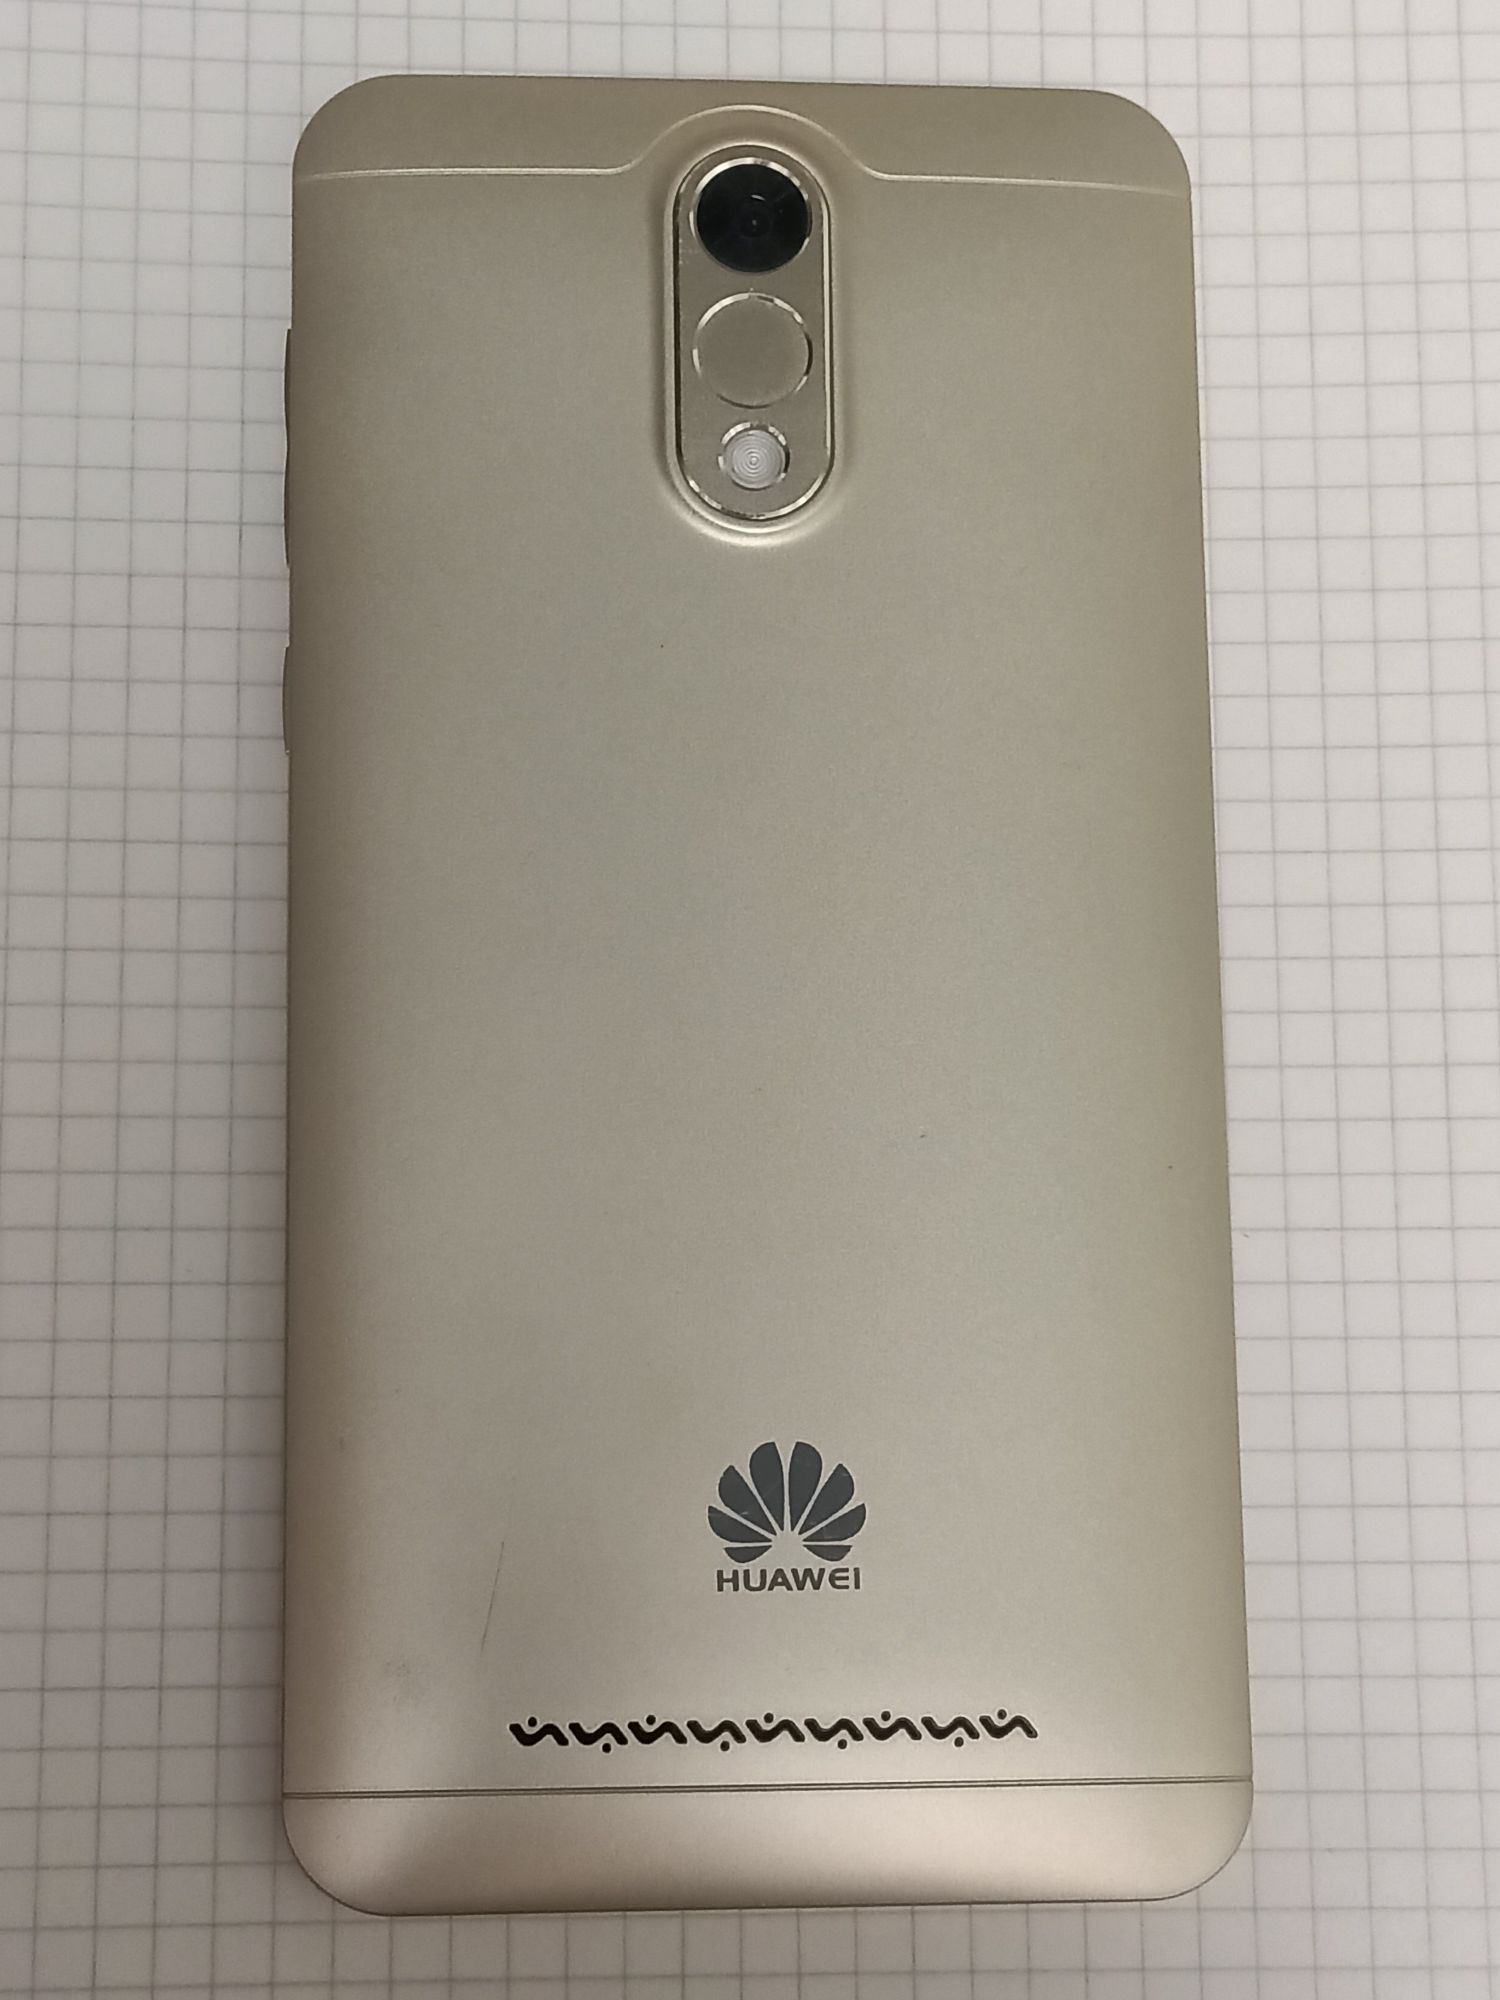 Телефон Huawei M9 б/у, как новый.